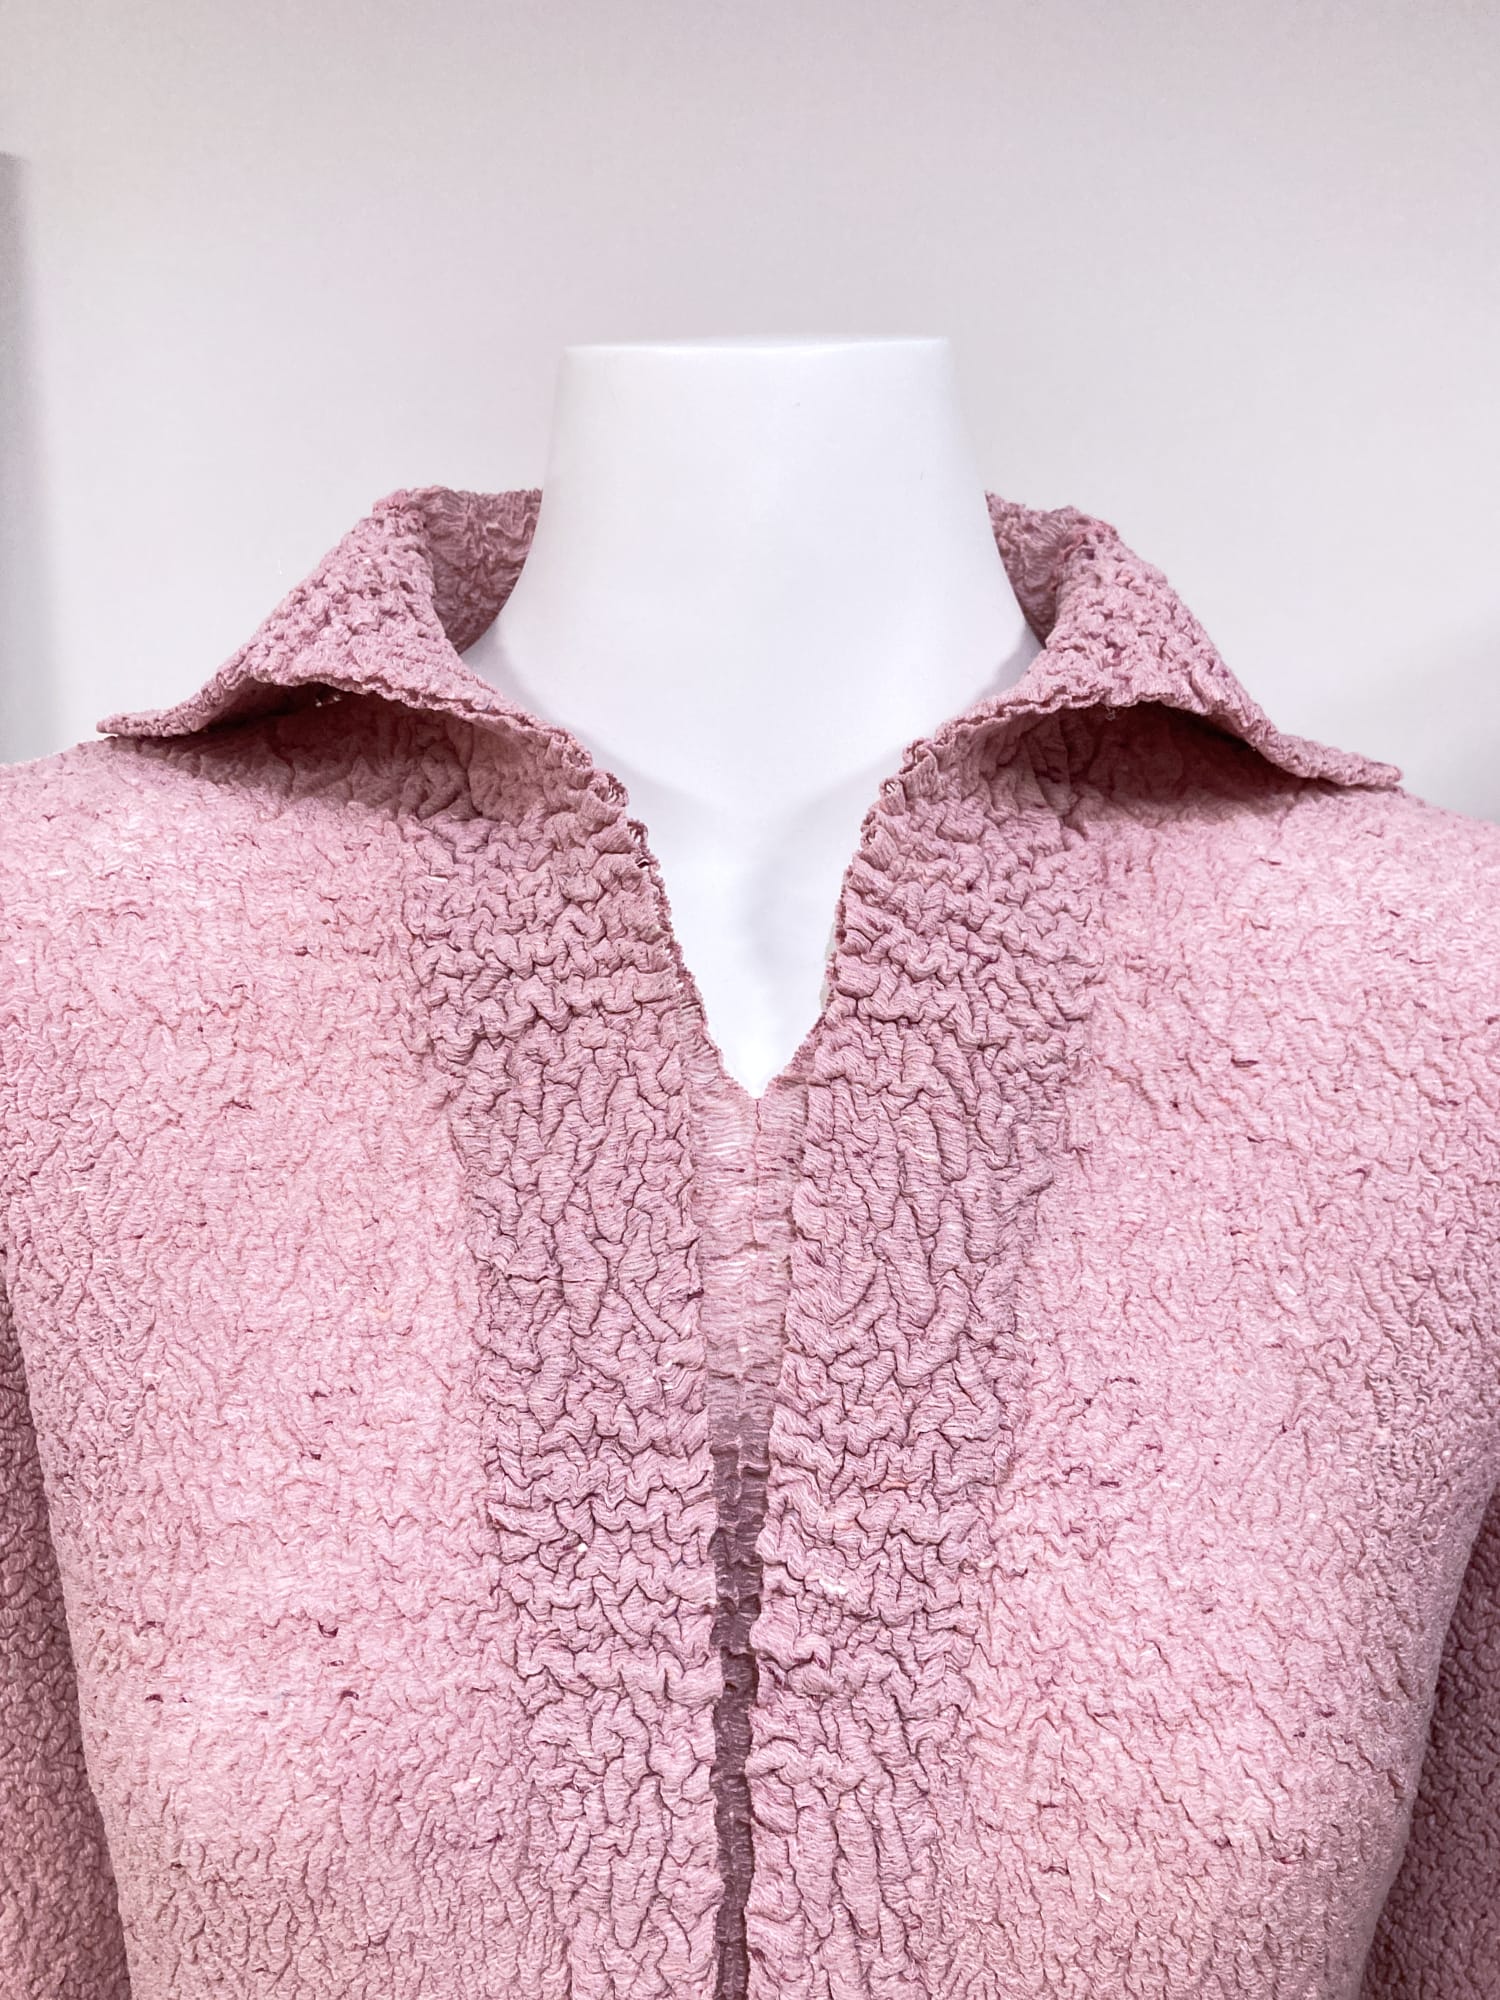 Wrinqle Inoue Pleats pale pink wrinkled polyester half sleeve dress